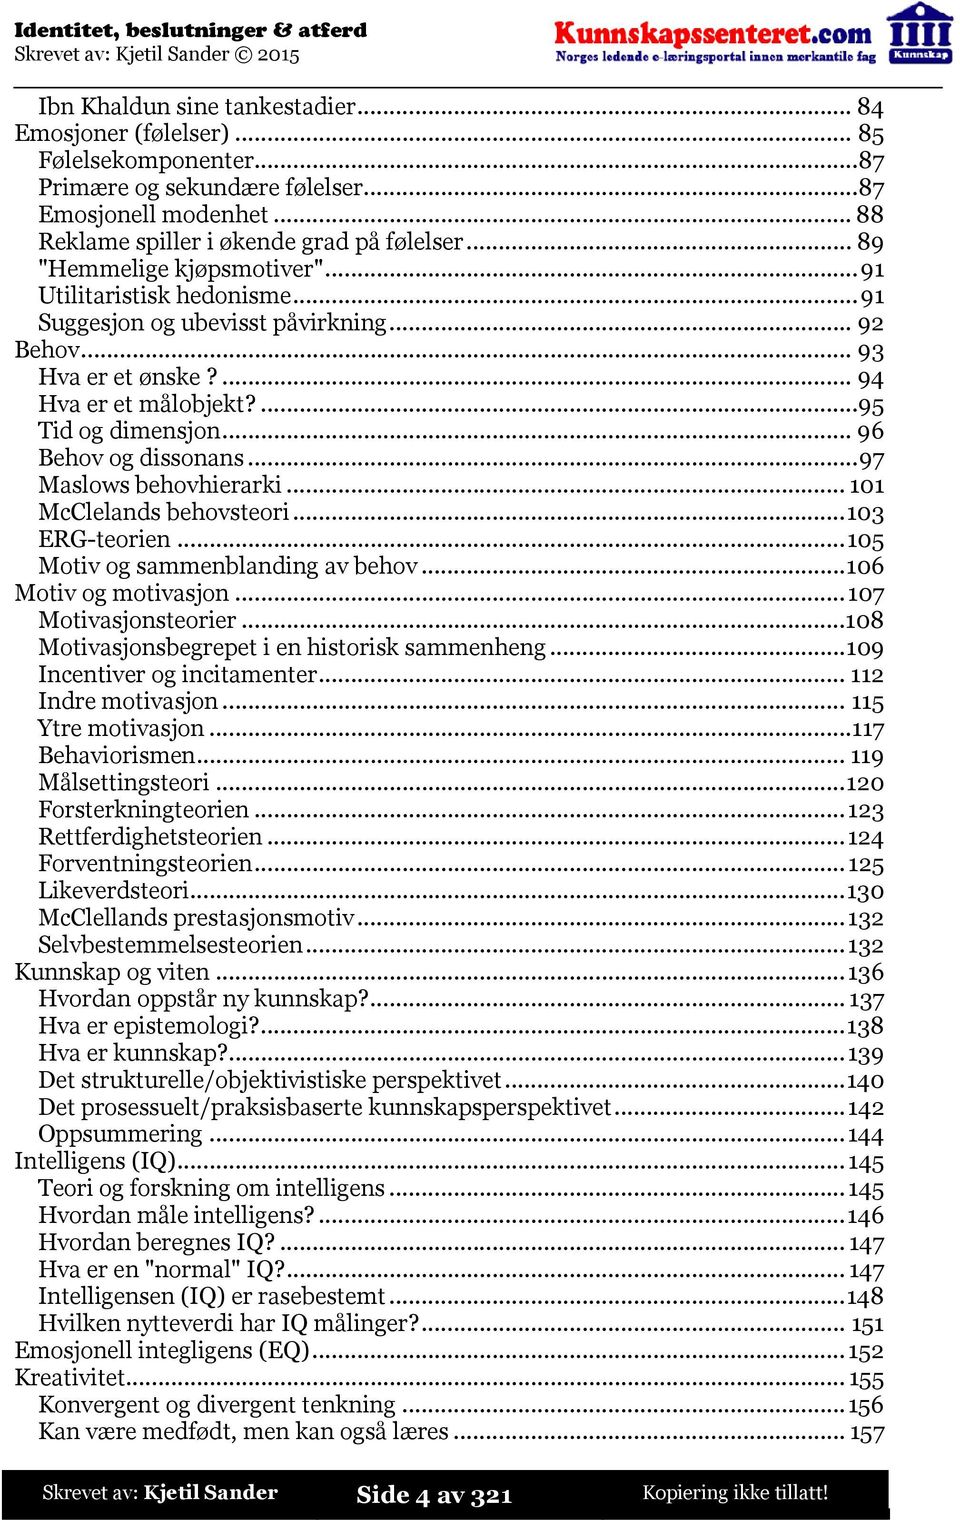 ..96 Behov og dissonans...97 Maslows behovhierarki...101 McClelands behovsteori...103 ERG-teorien...105 Motiv og sammenblanding av behov...106 Motiv og motivasjon...107 Motivasjonsteorier.